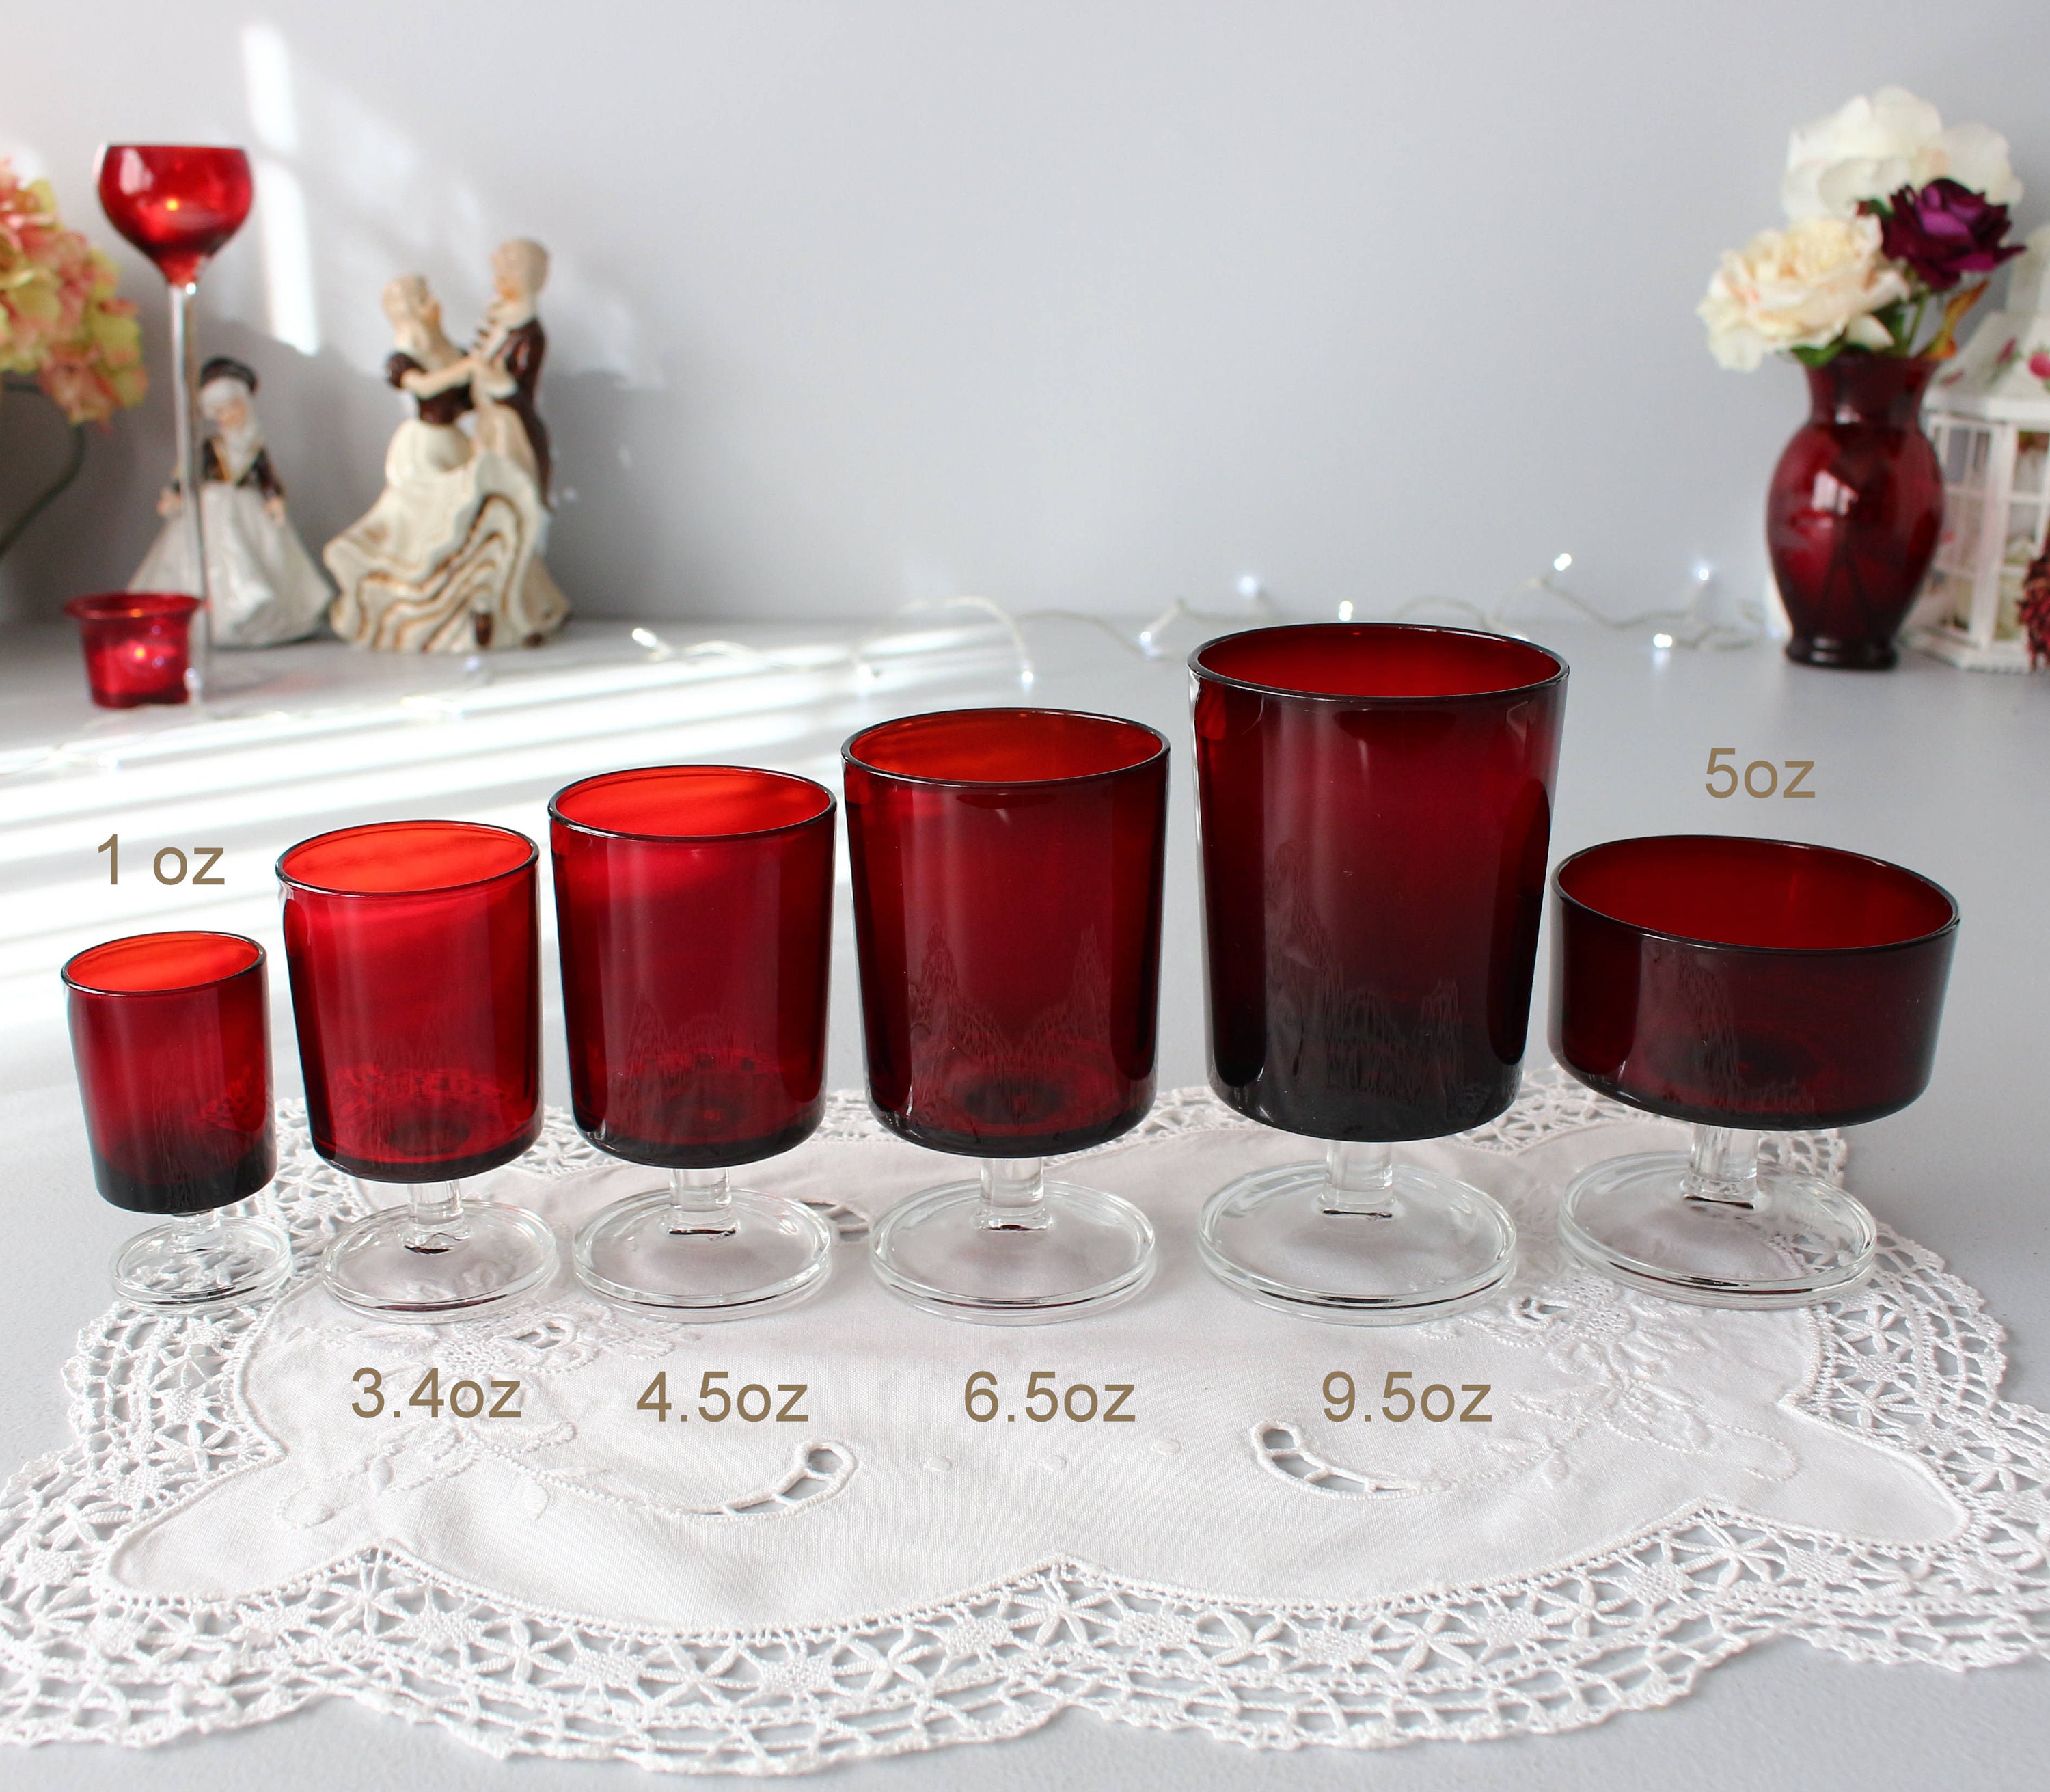 6 Vintage Ruby Red Stem Wine Glass Luminarc Christmas Holiday 